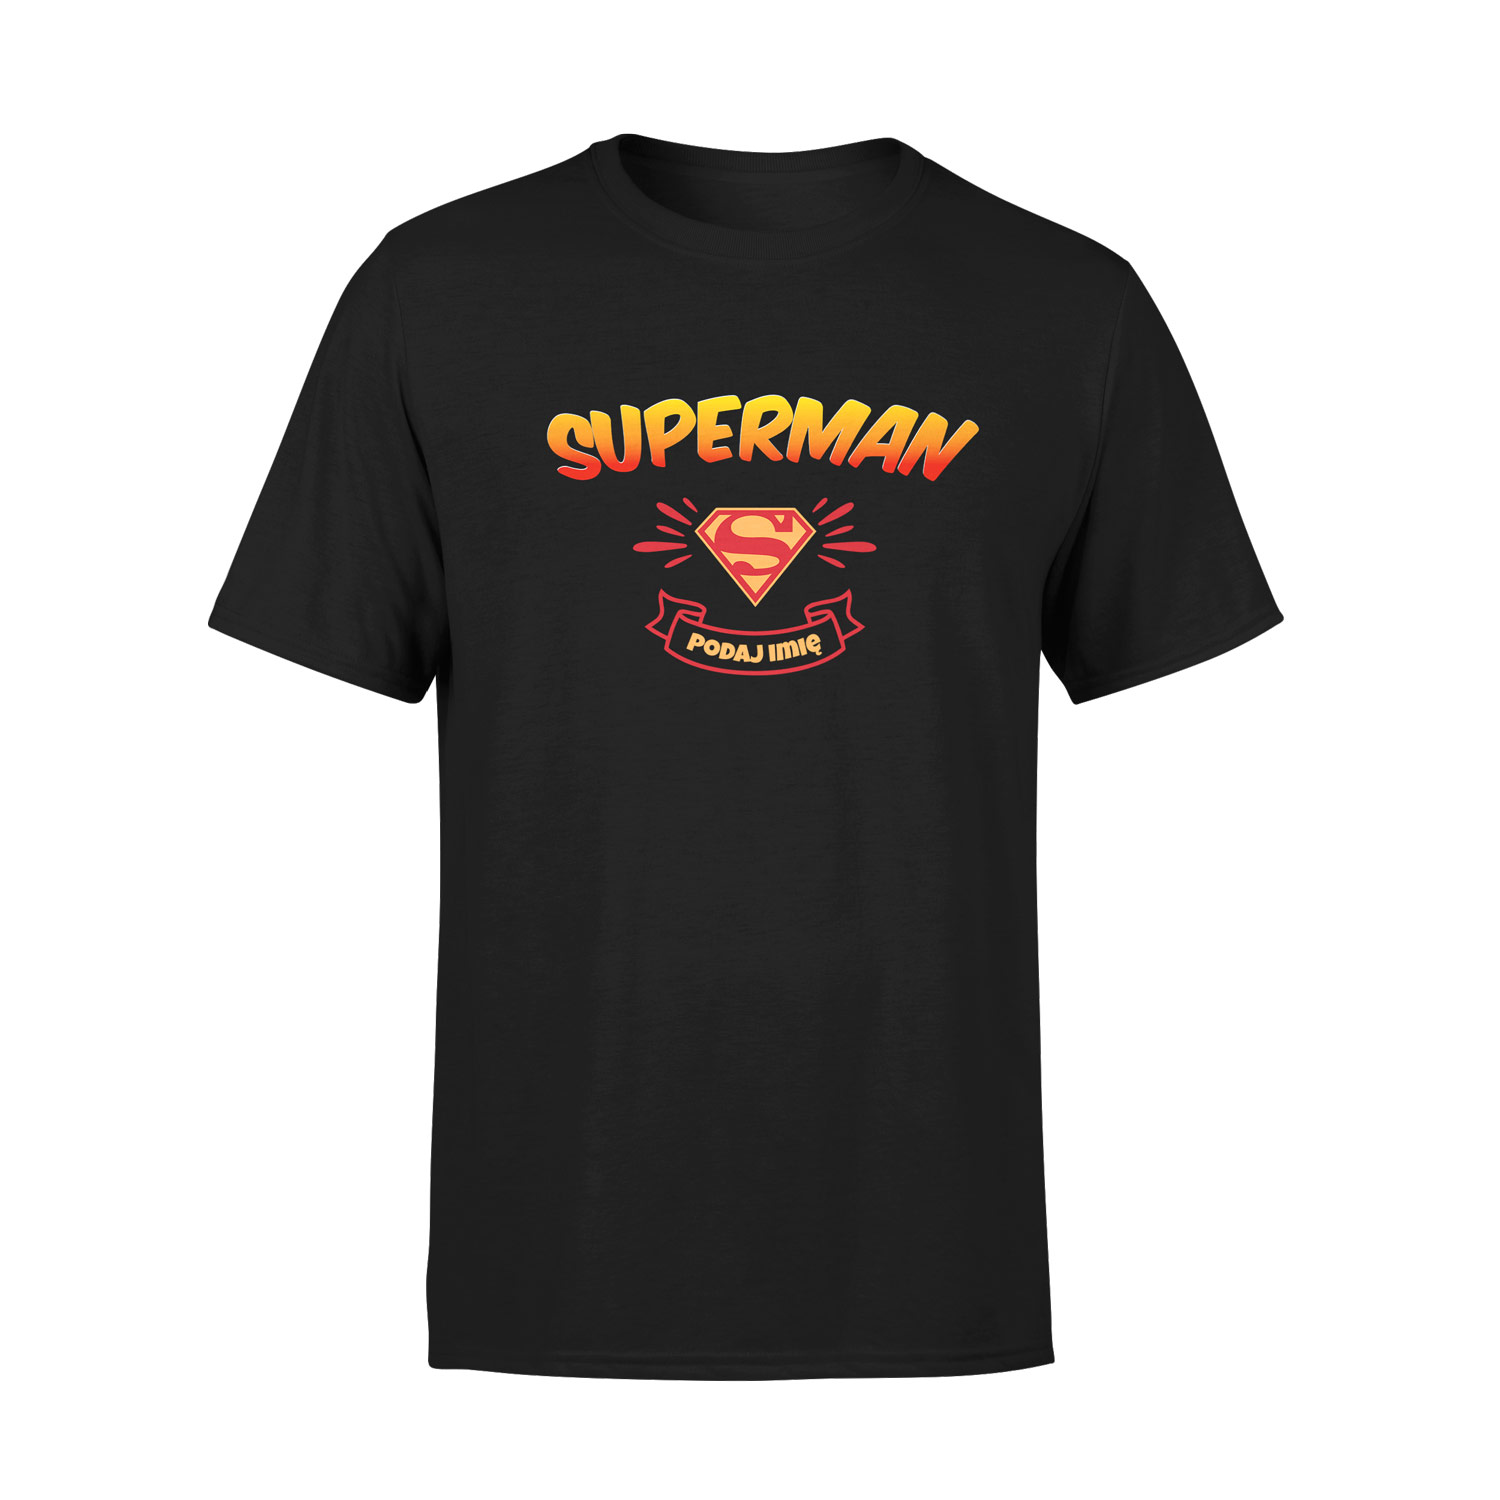 Koszulka dla chłopaka SUPERMAN